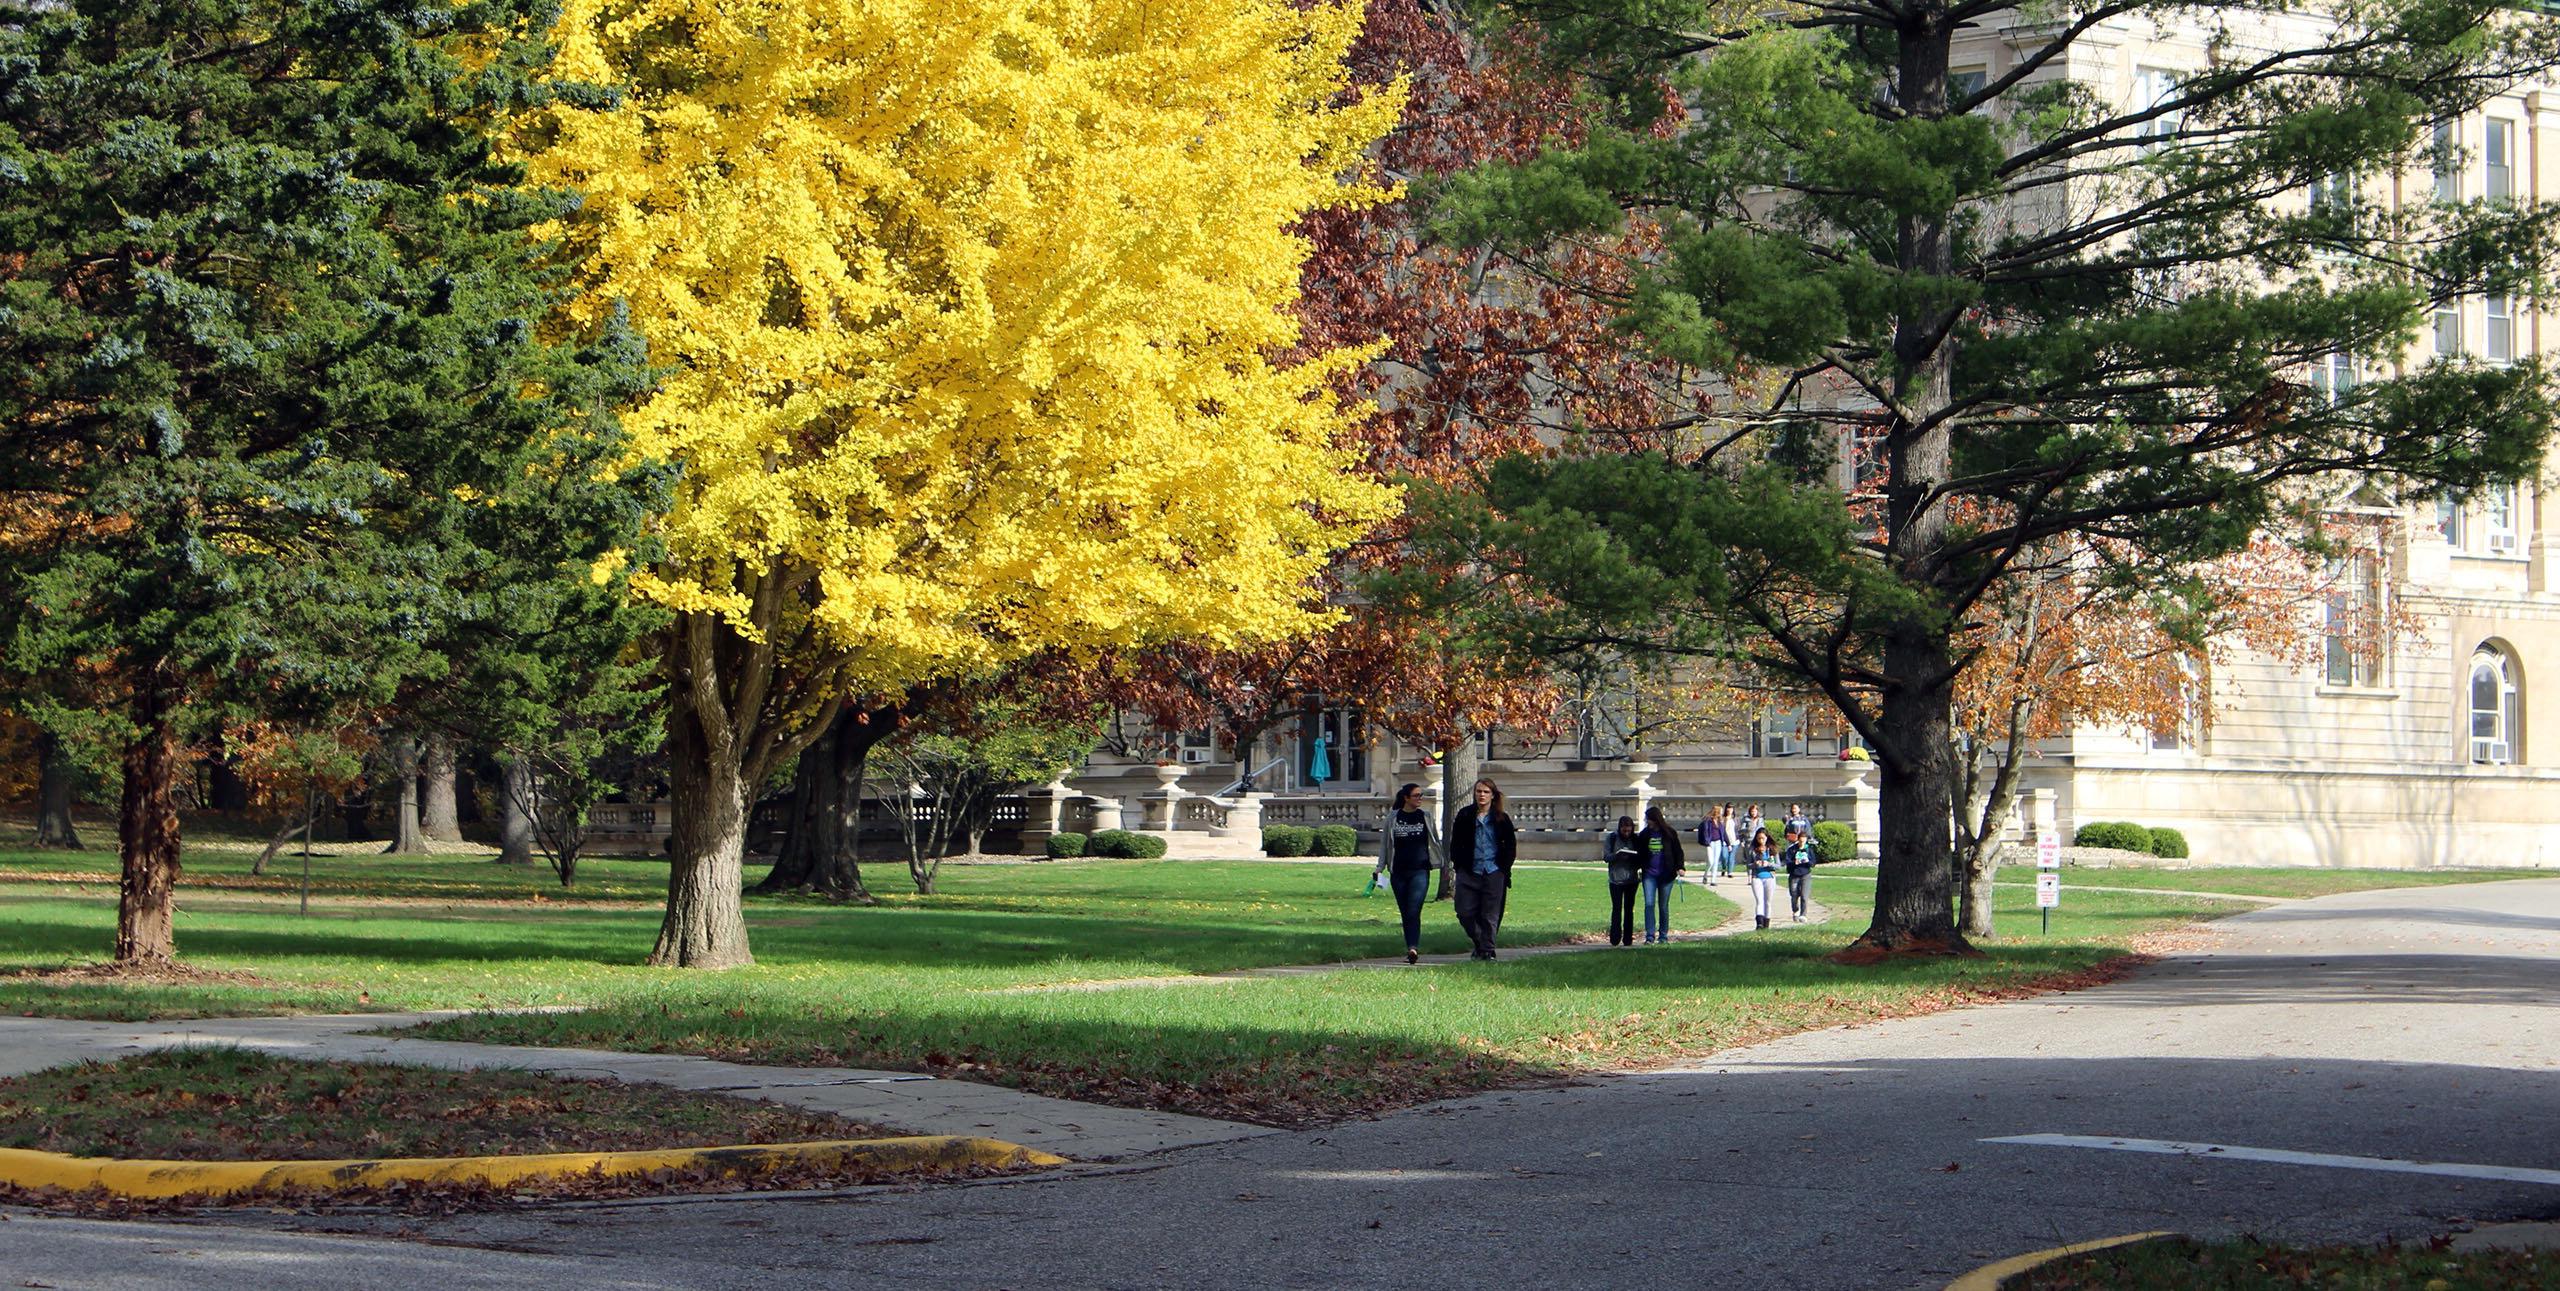 Students walking outside along sidewalk past fall colored trees